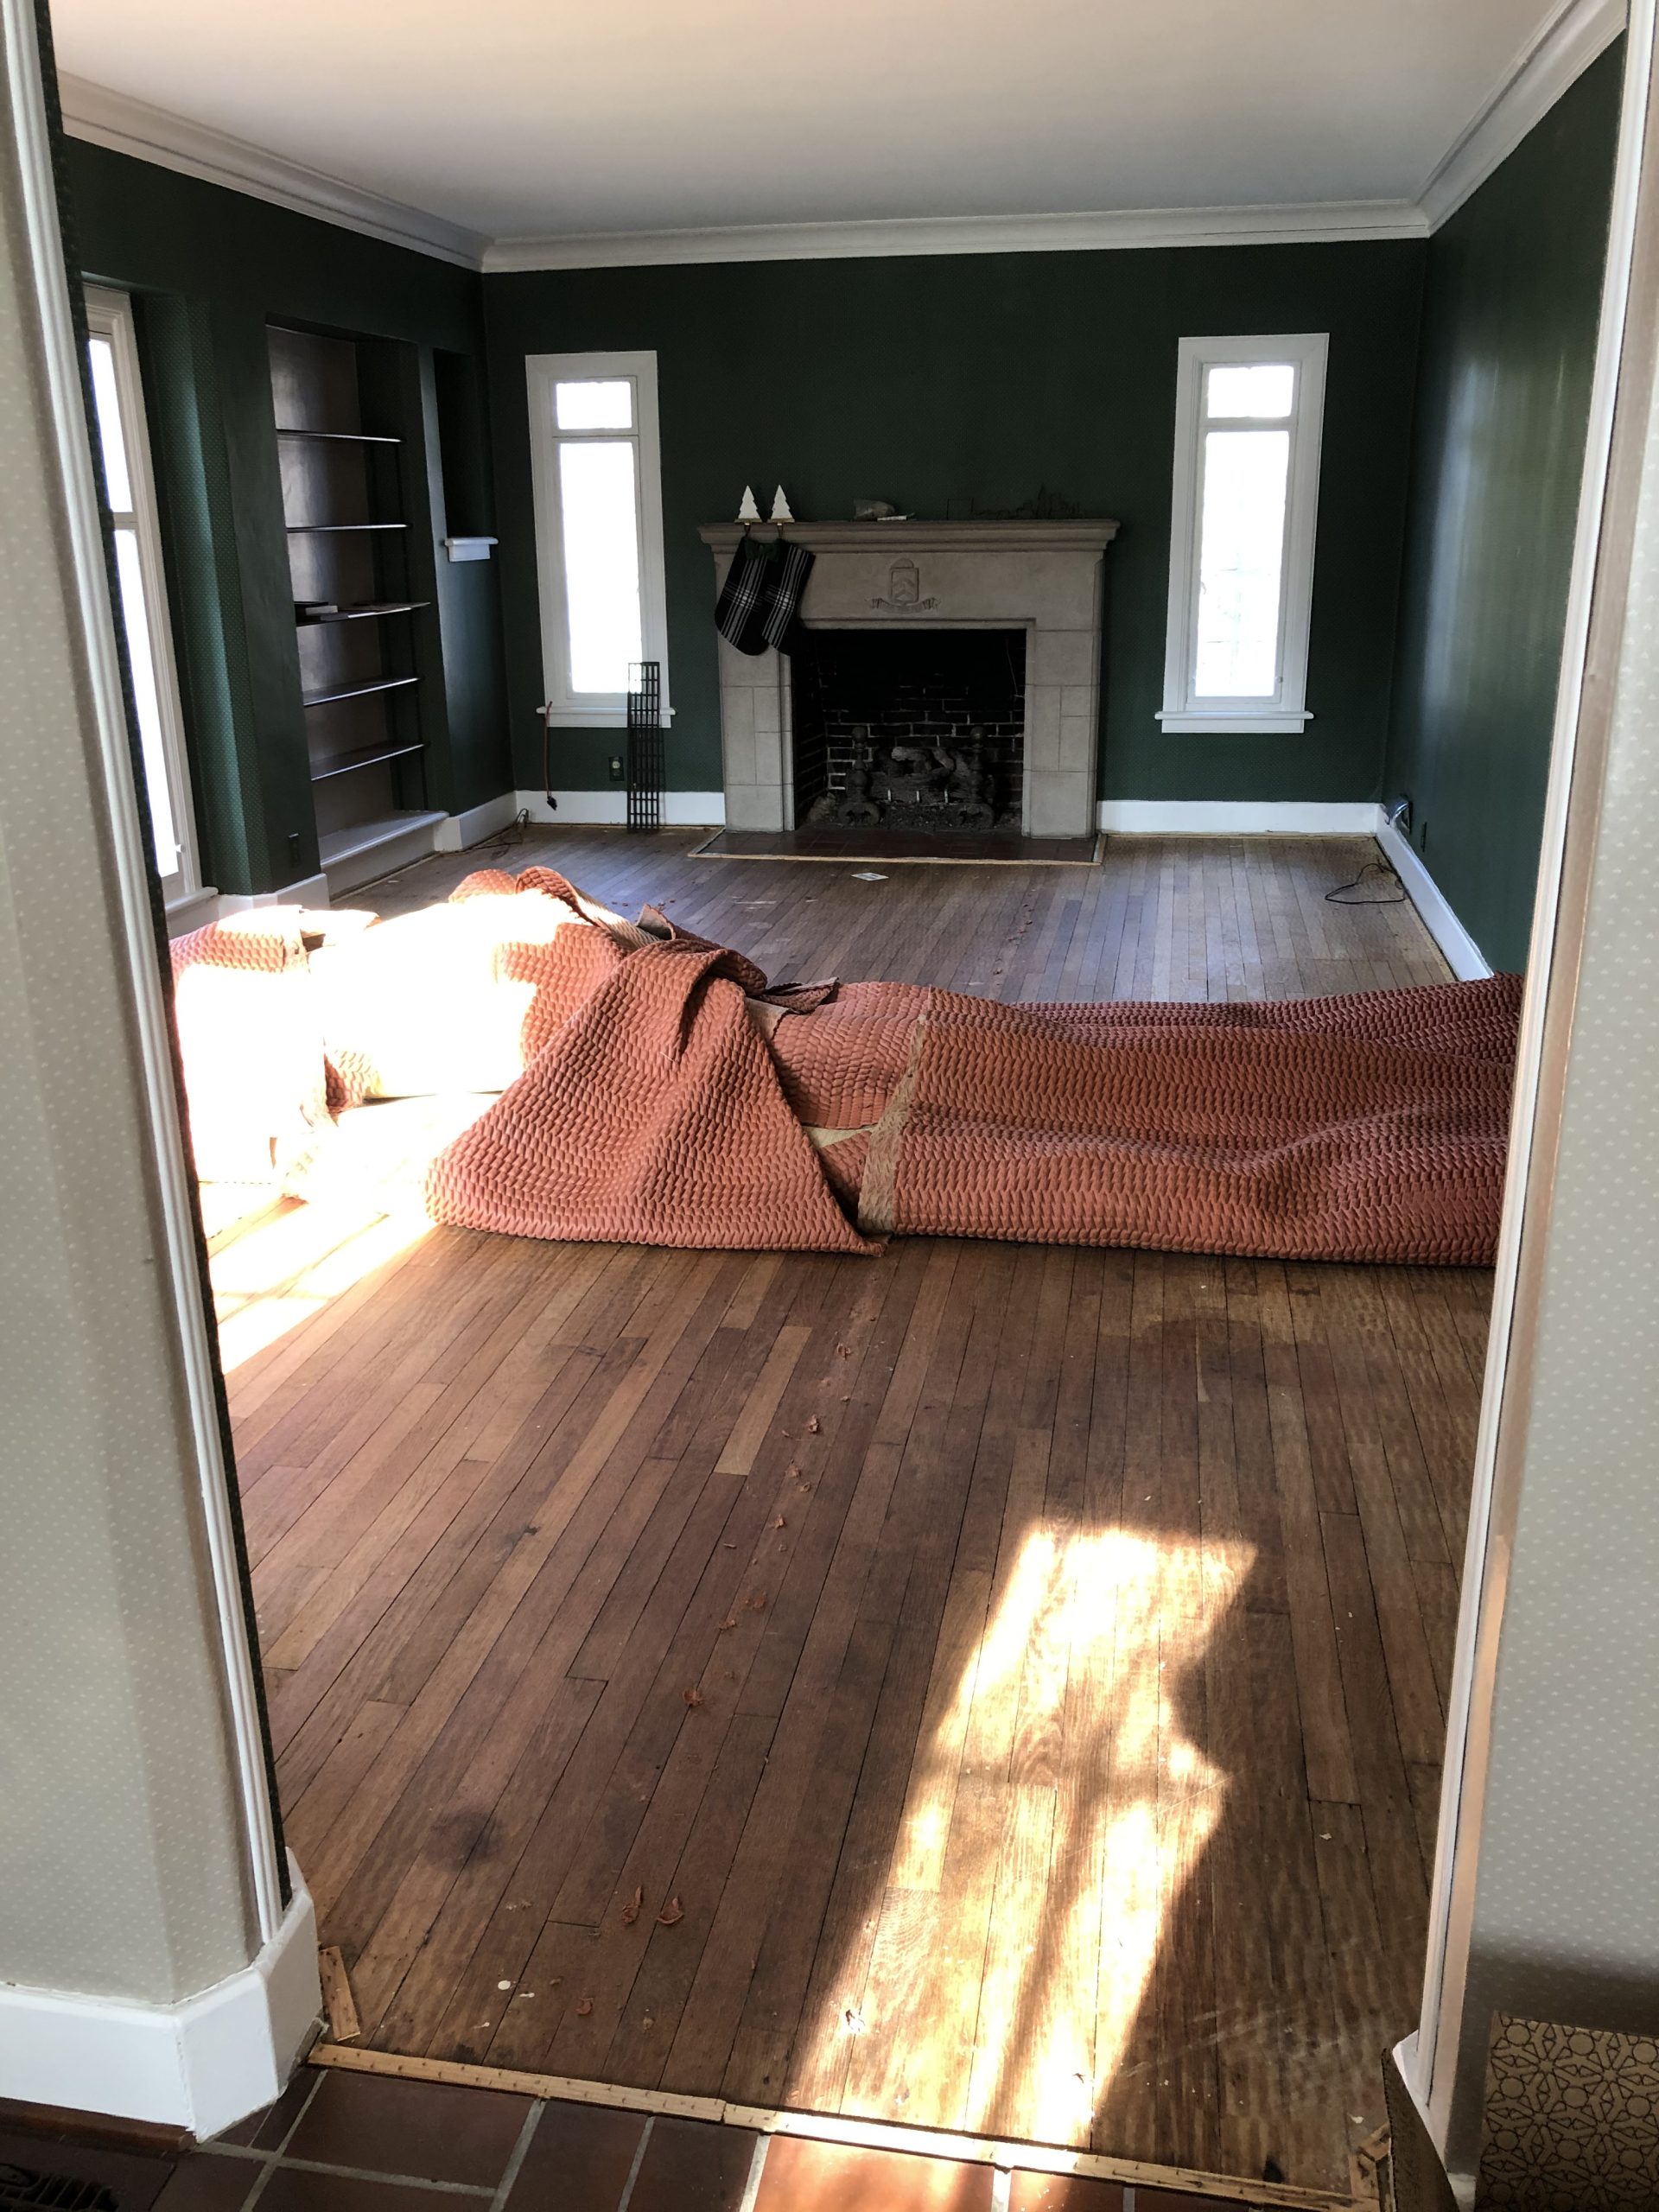 Green Living Room Reveal with Revival Rugs | Miranda Schroeder Blog

www.mirandaschroeder.com